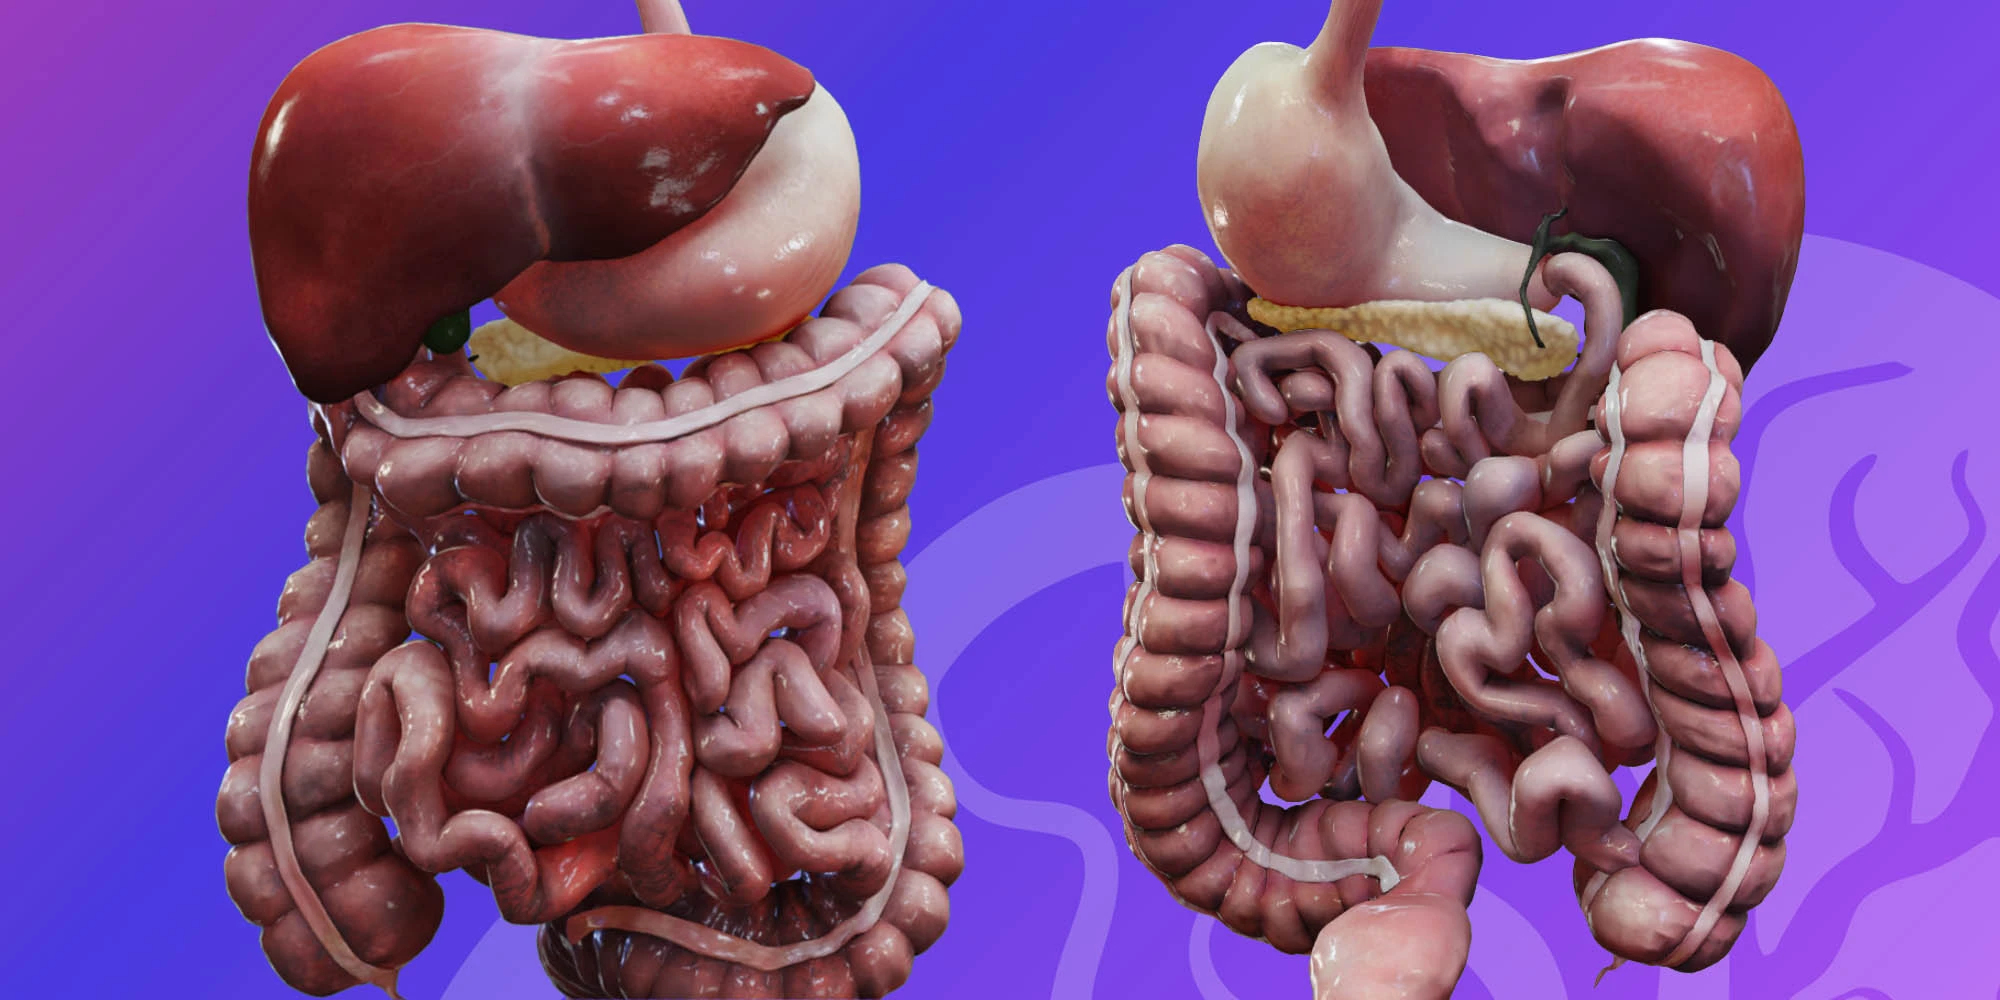 Abdomen digestive system image